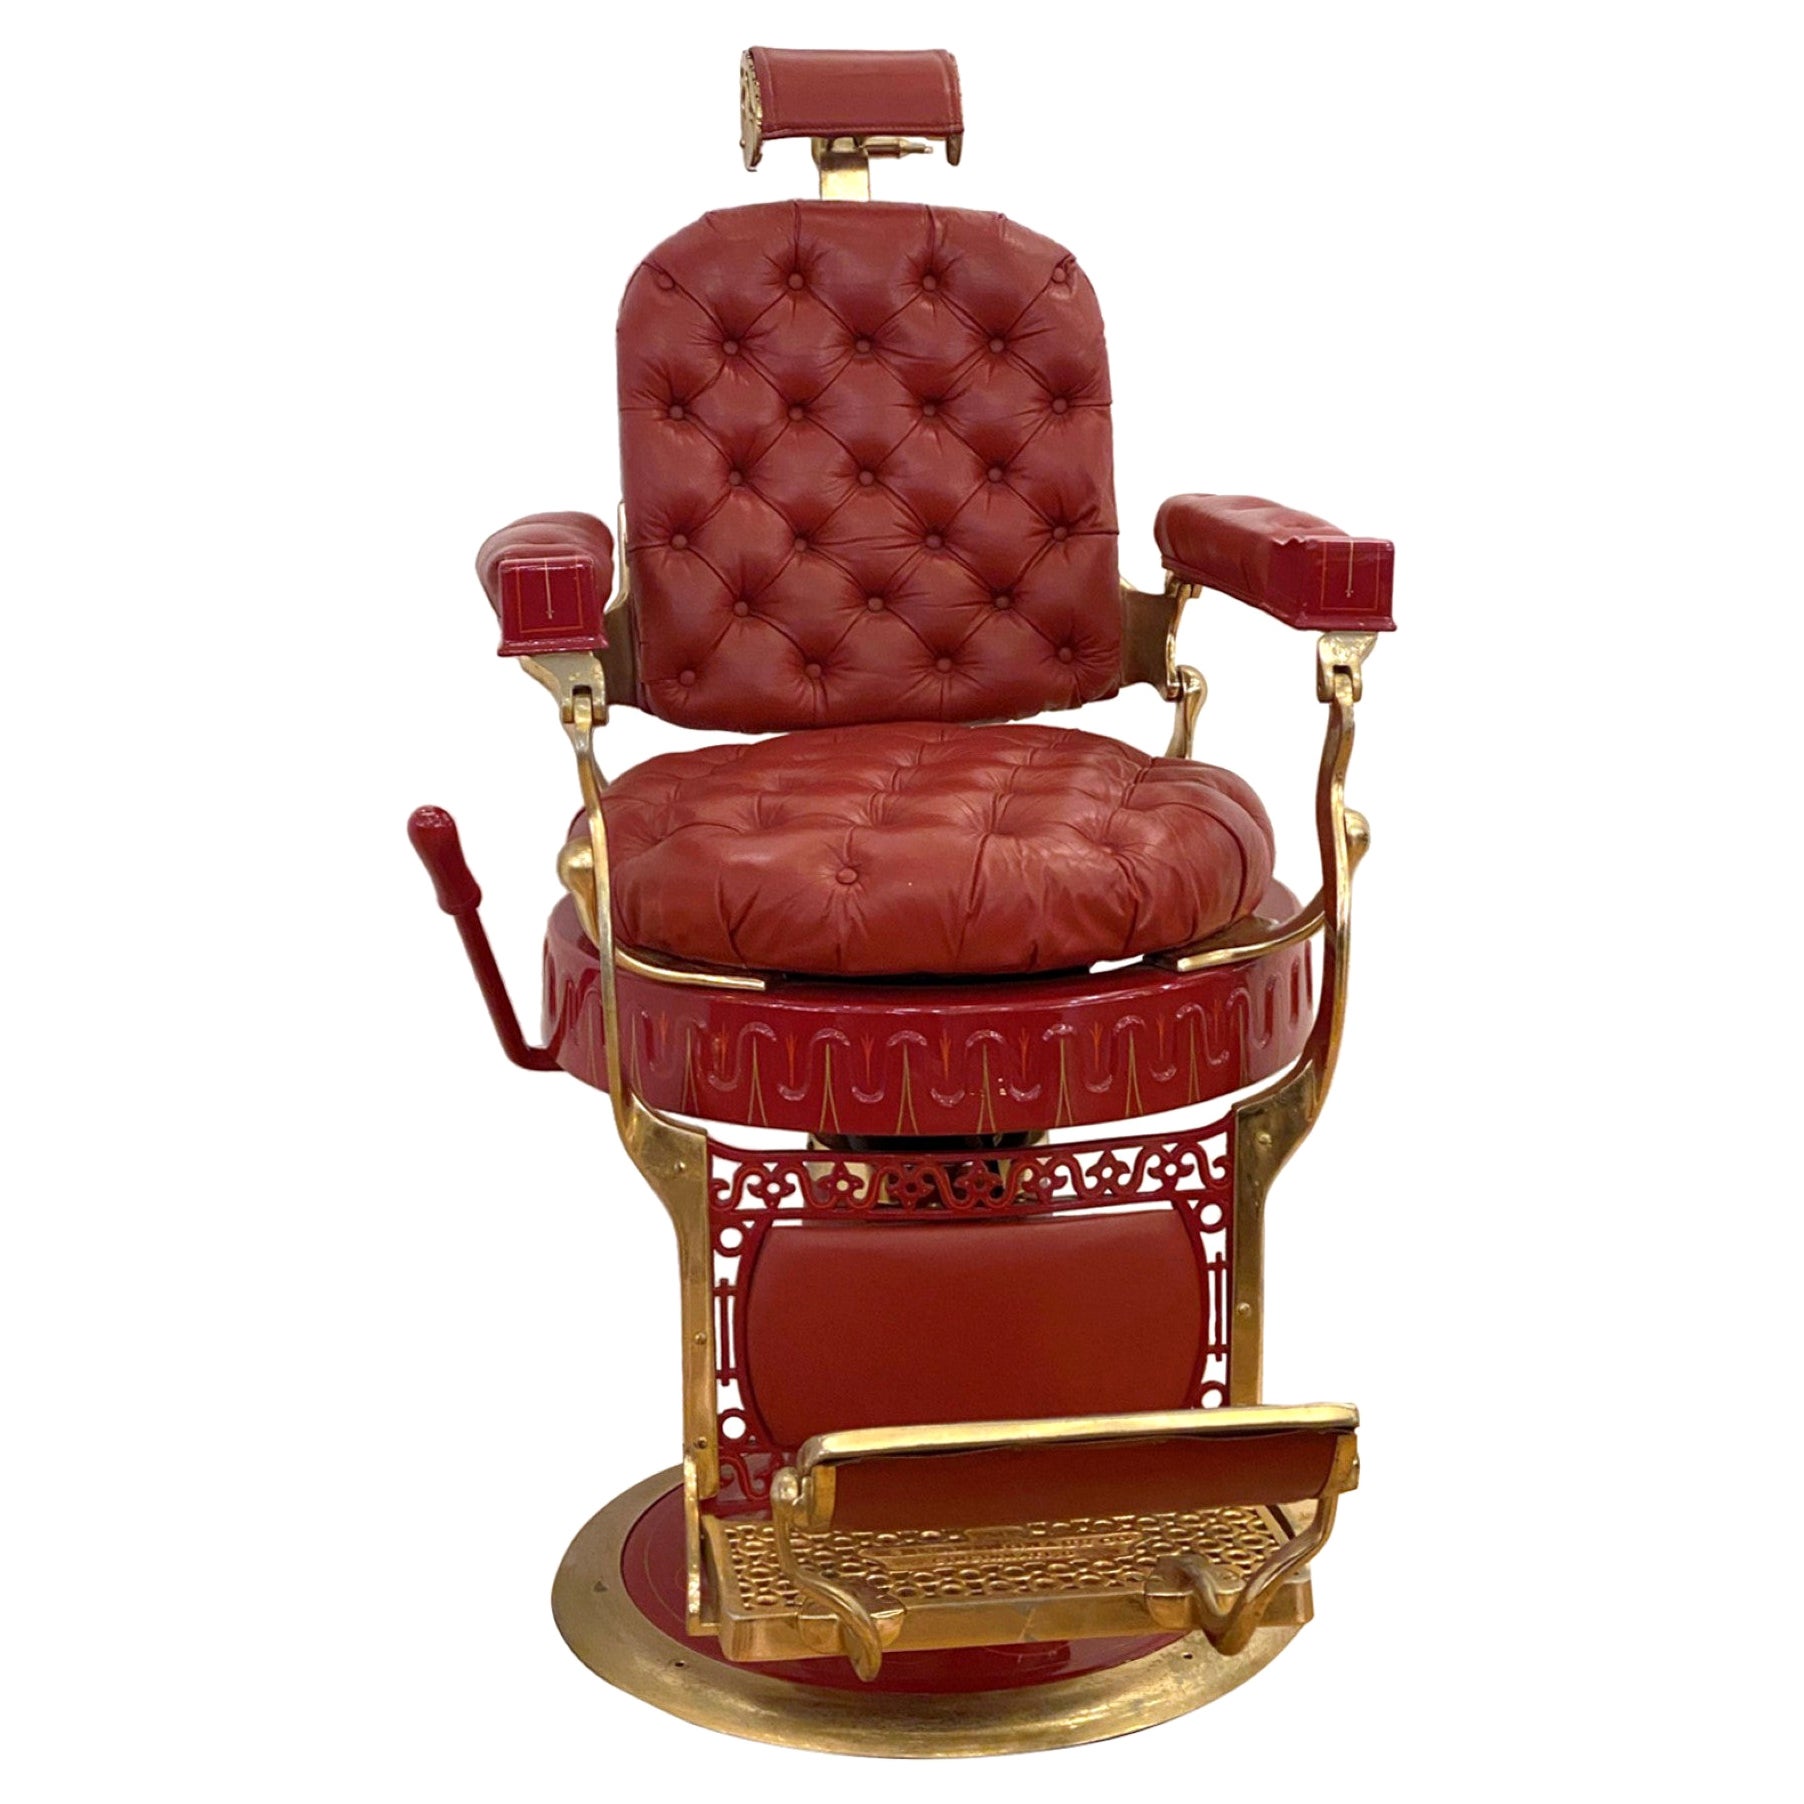 Berninghaus Hercules Red Barber Chair with Custom Detailing Restored